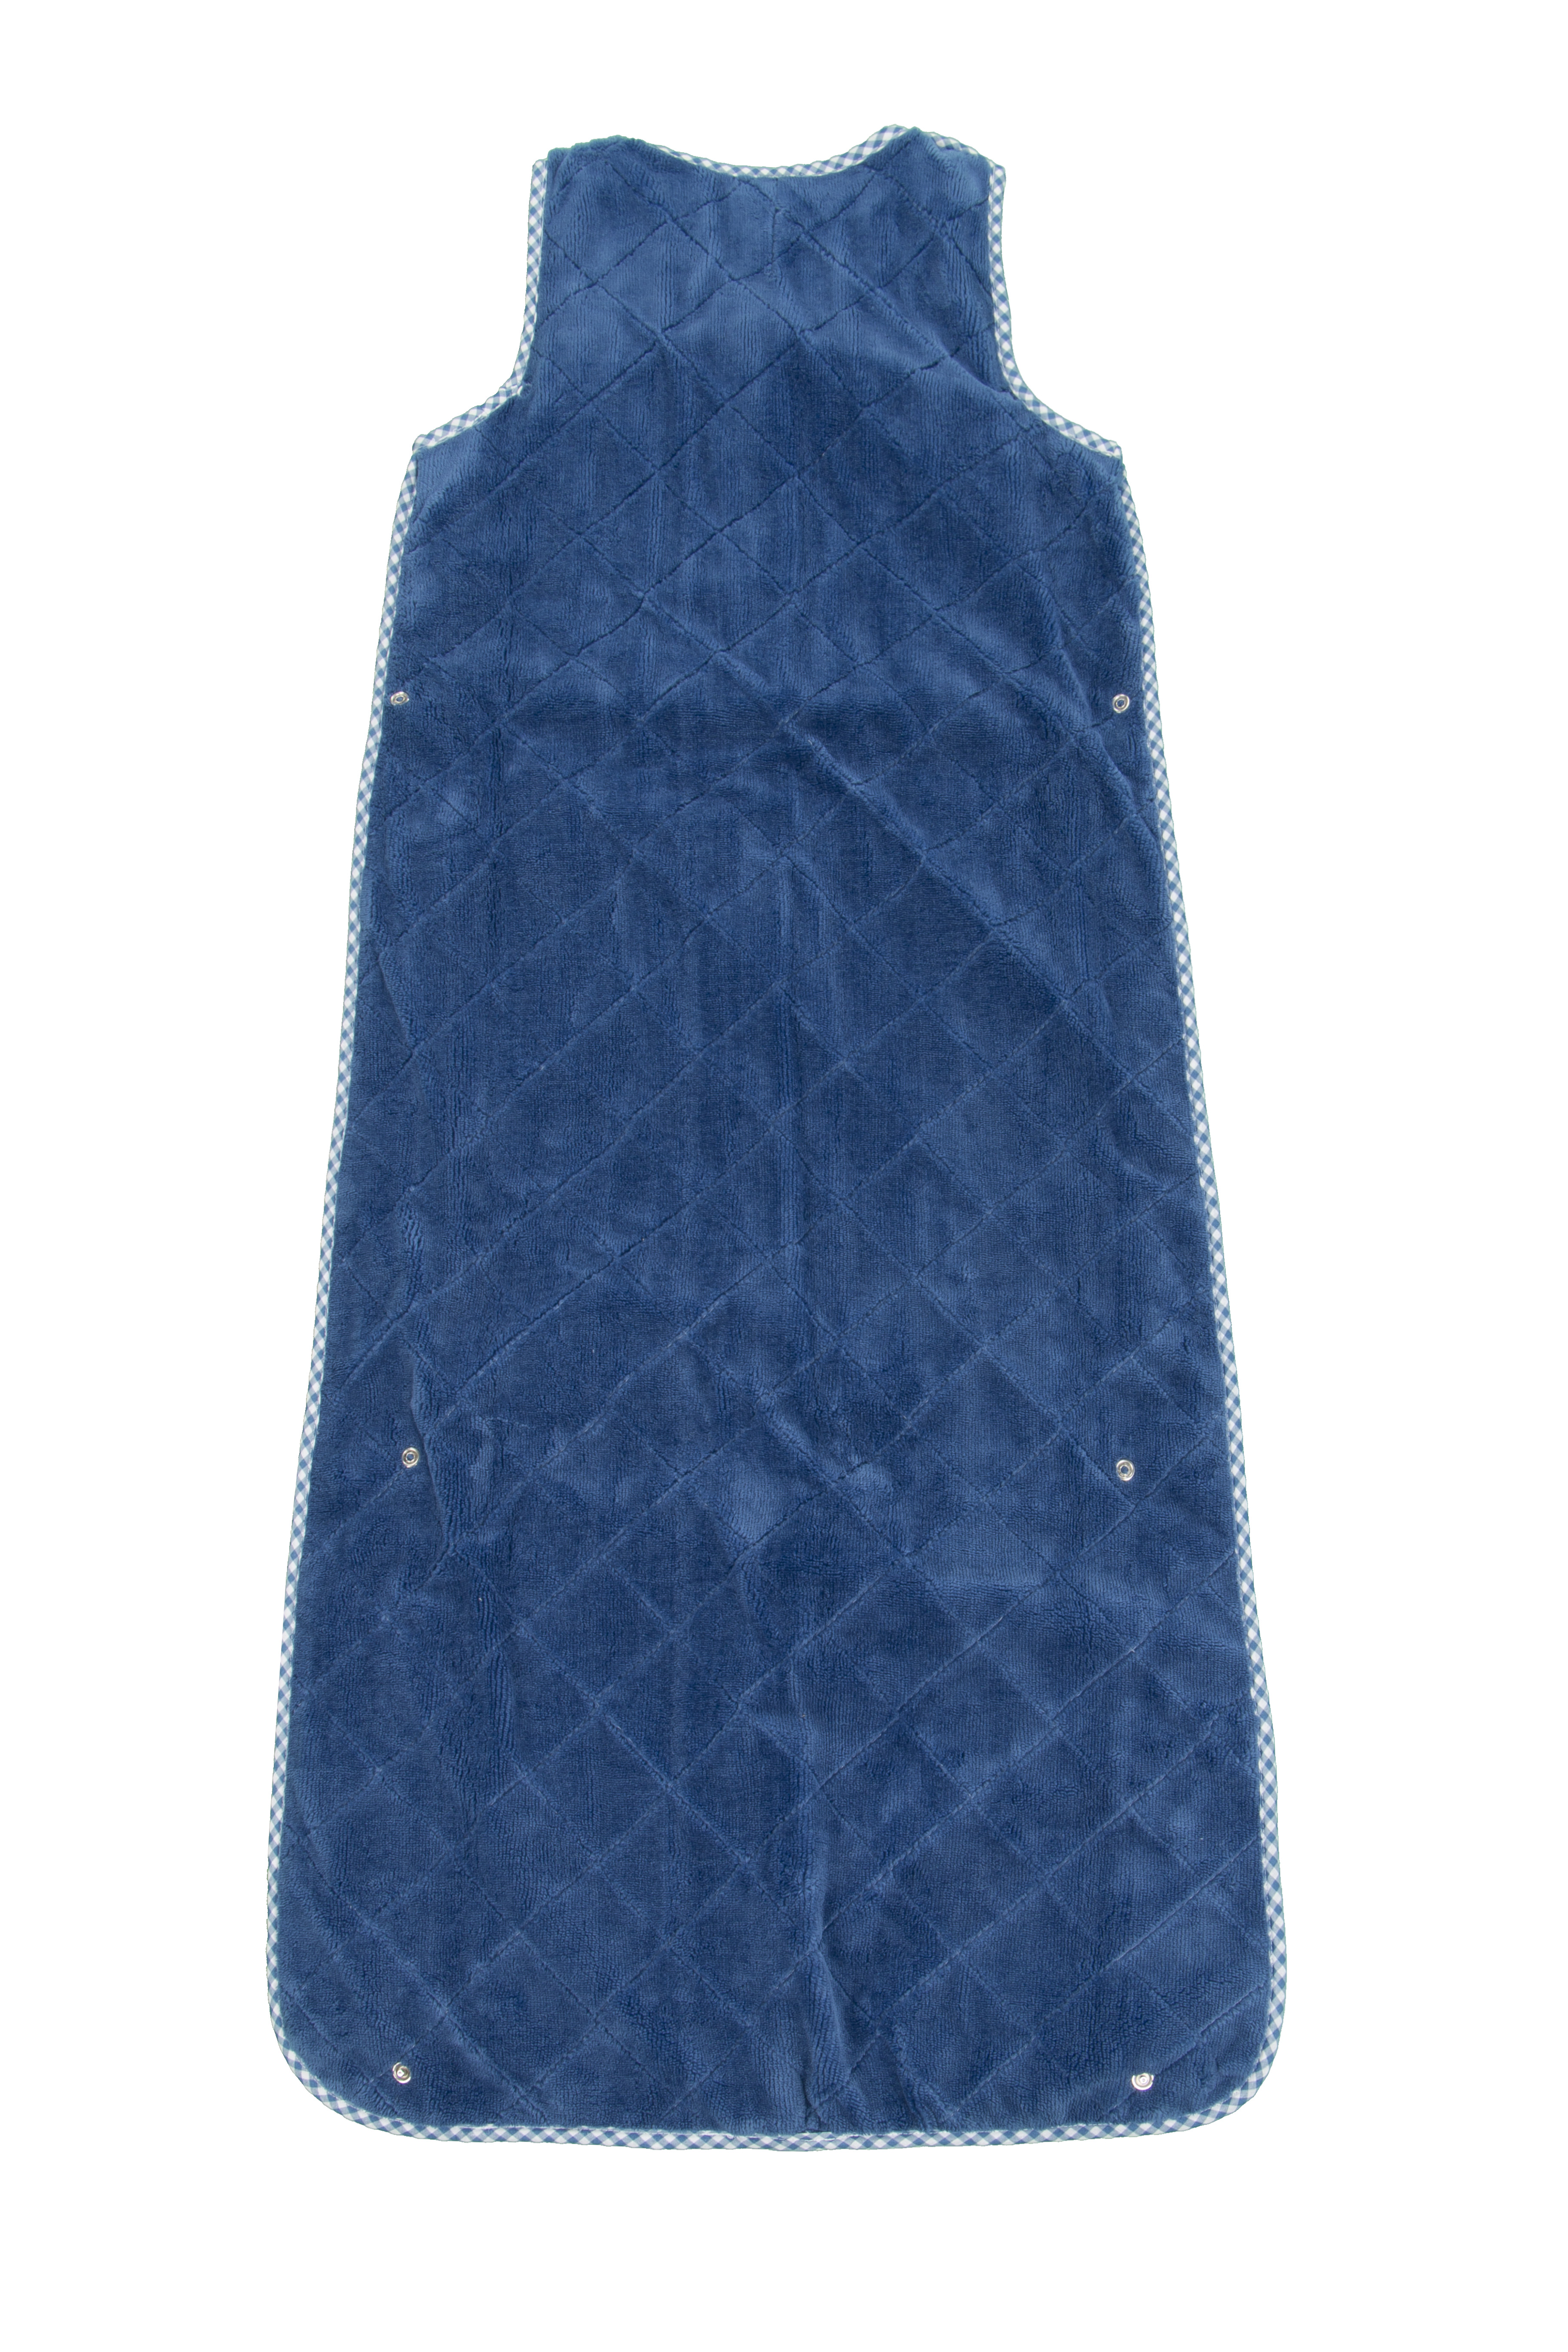 Slaapzak Boy uni blauw, 50x70-90-11